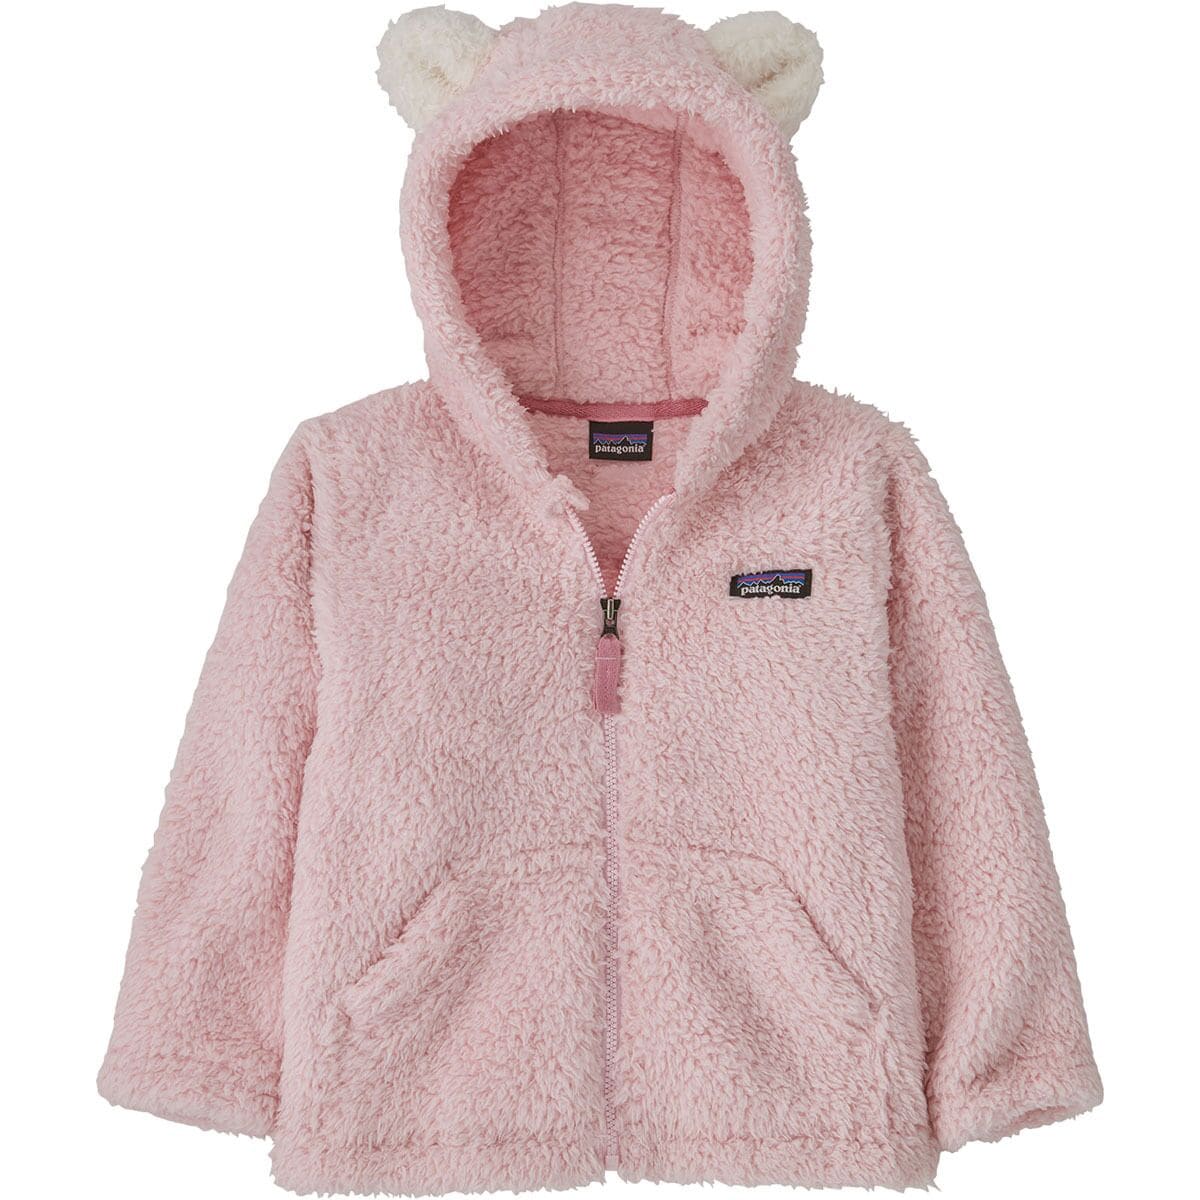 Patagonia Furry Friends Fleece Hooded Jacket - Infants